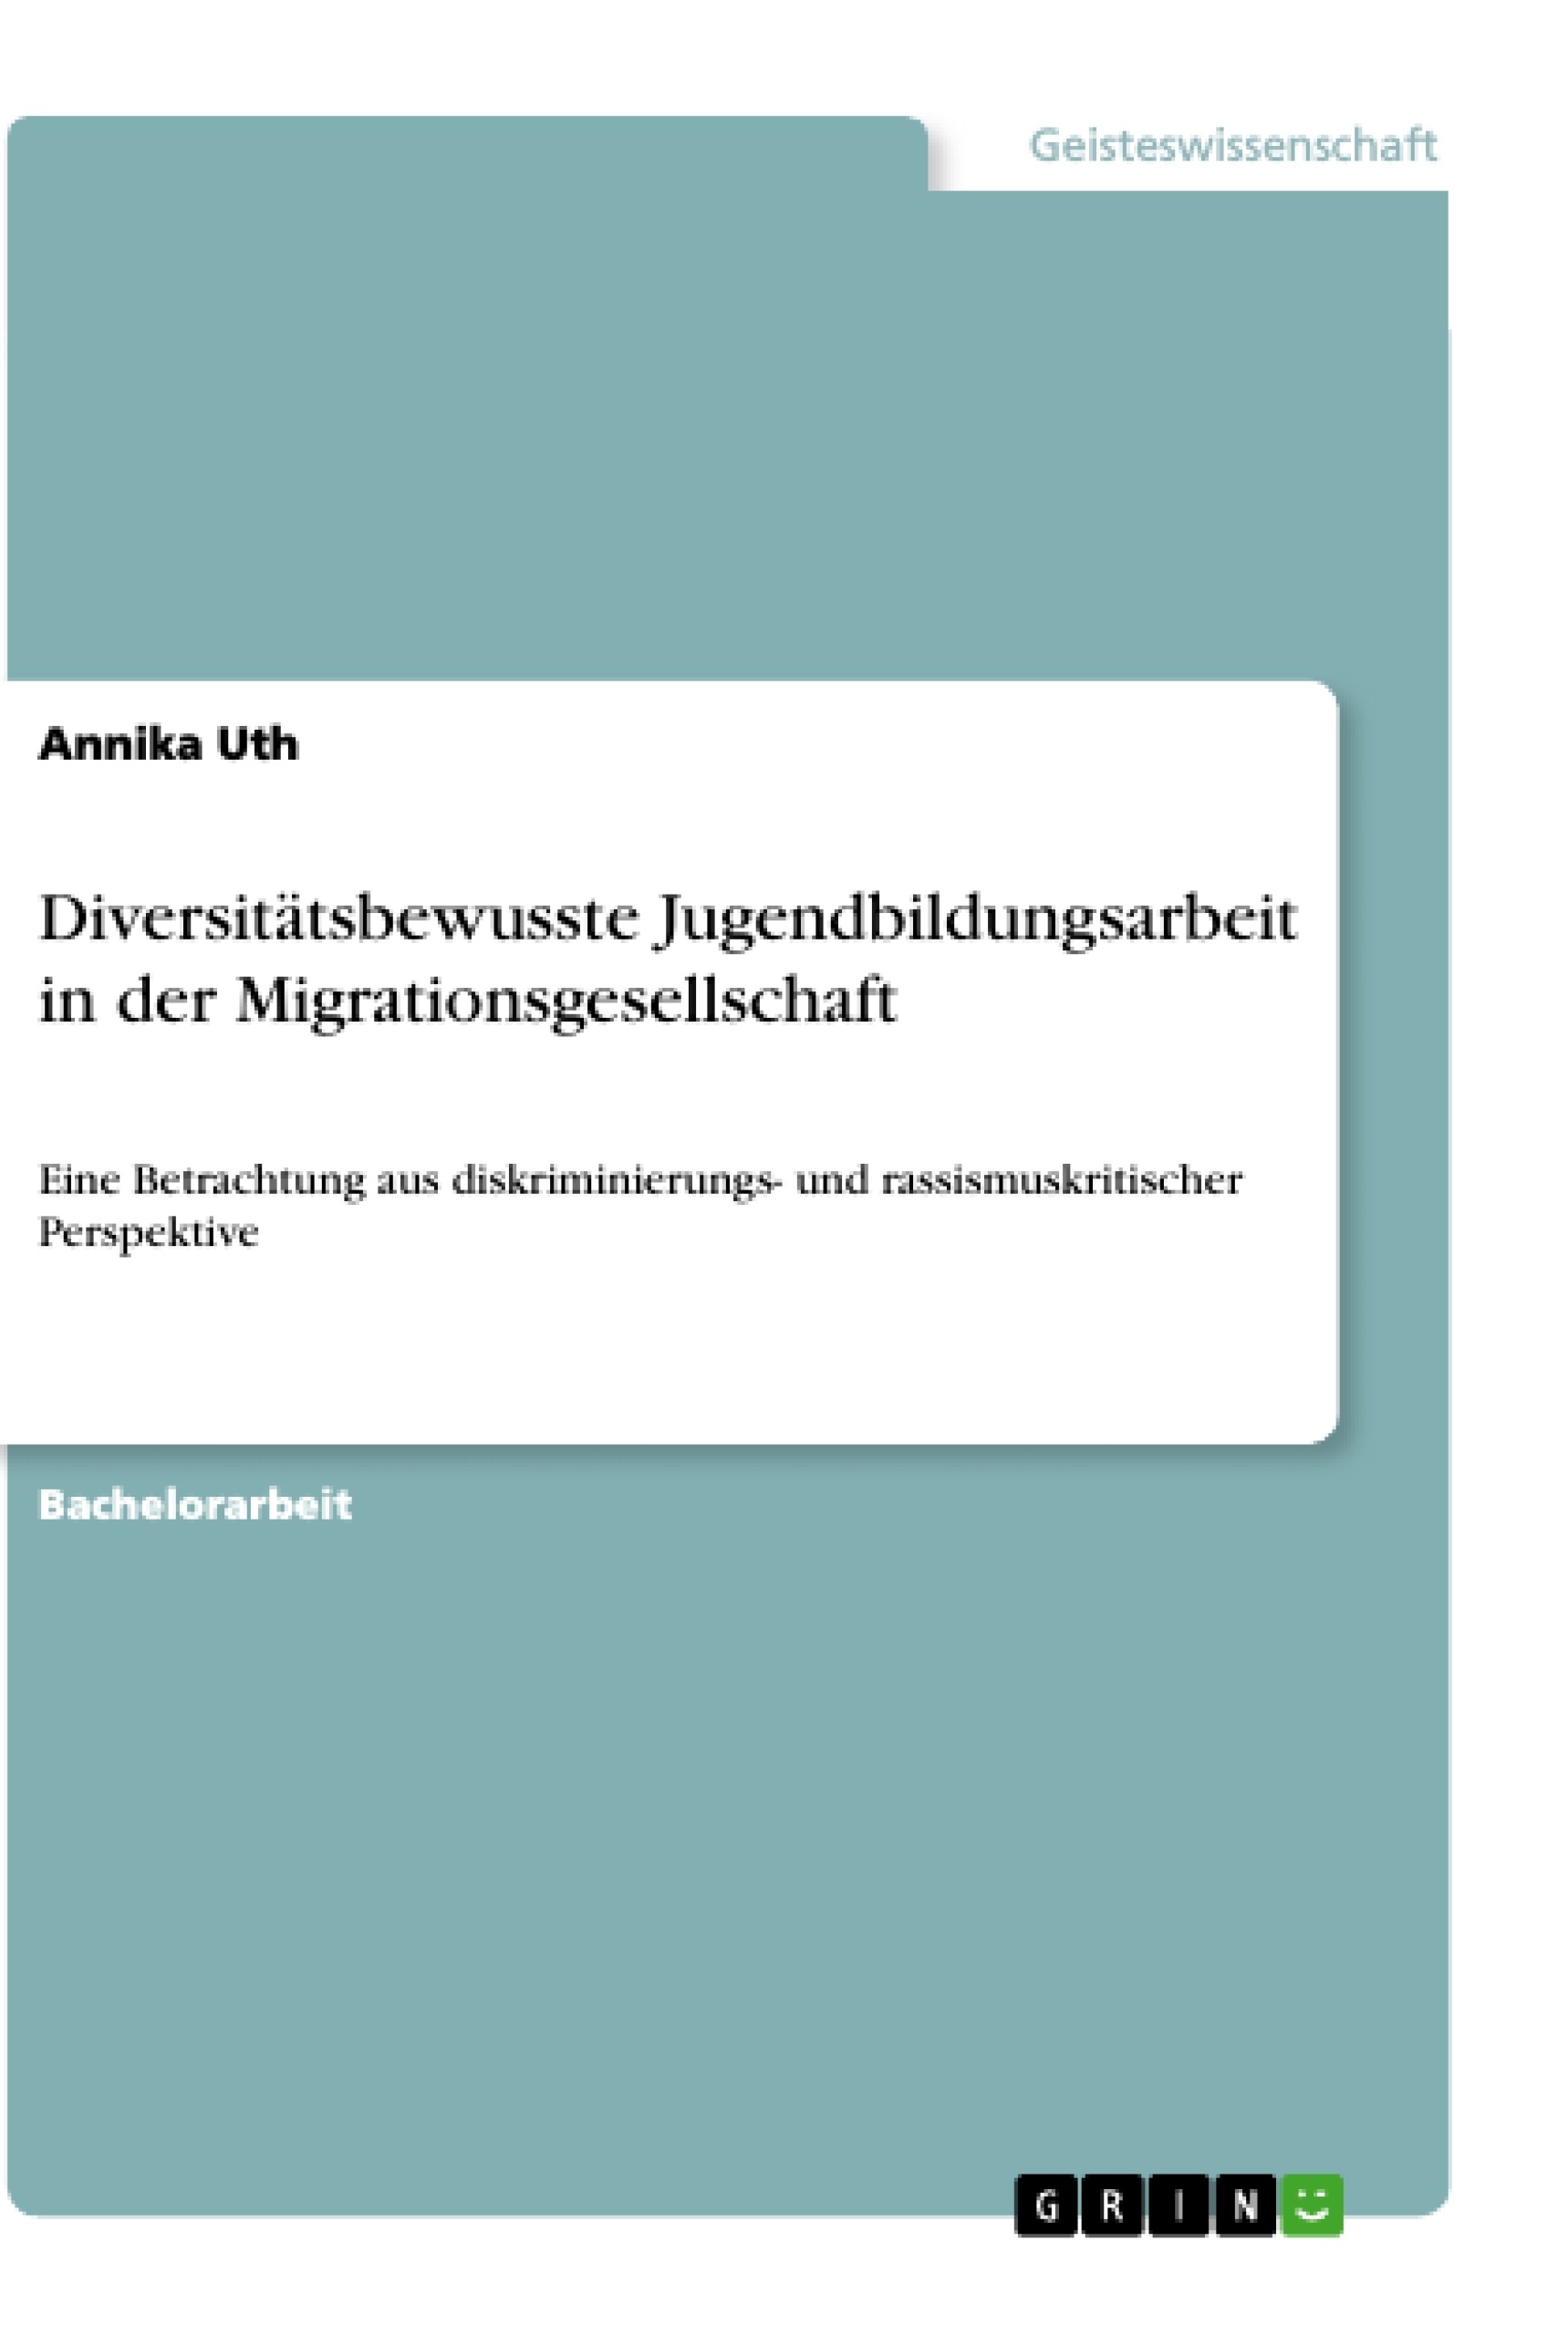 Title: Diversitätsbewusste Jugendbildungsarbeit in der Migrationsgesellschaft